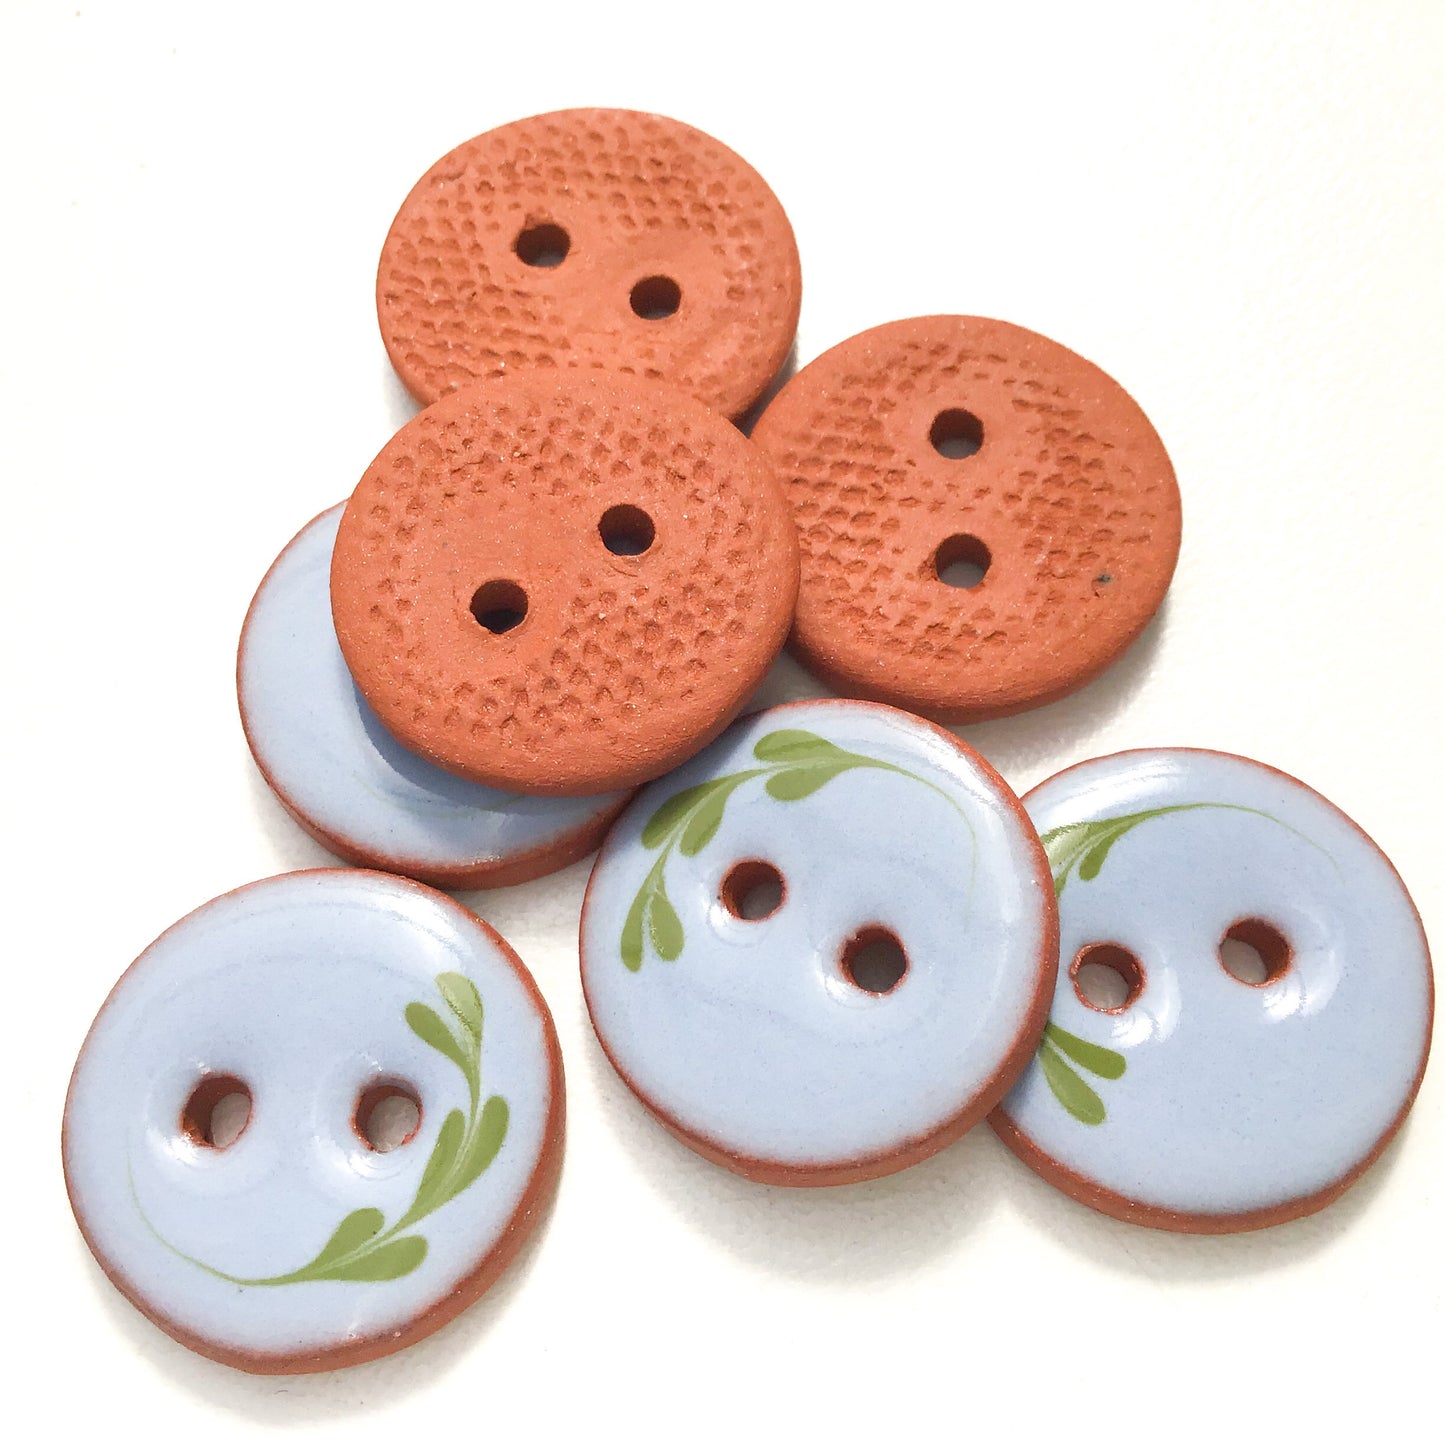 Light Blue Ceramic Leaflet Buttons - Round Ceramic Buttons - 3/4" - 7 Pack